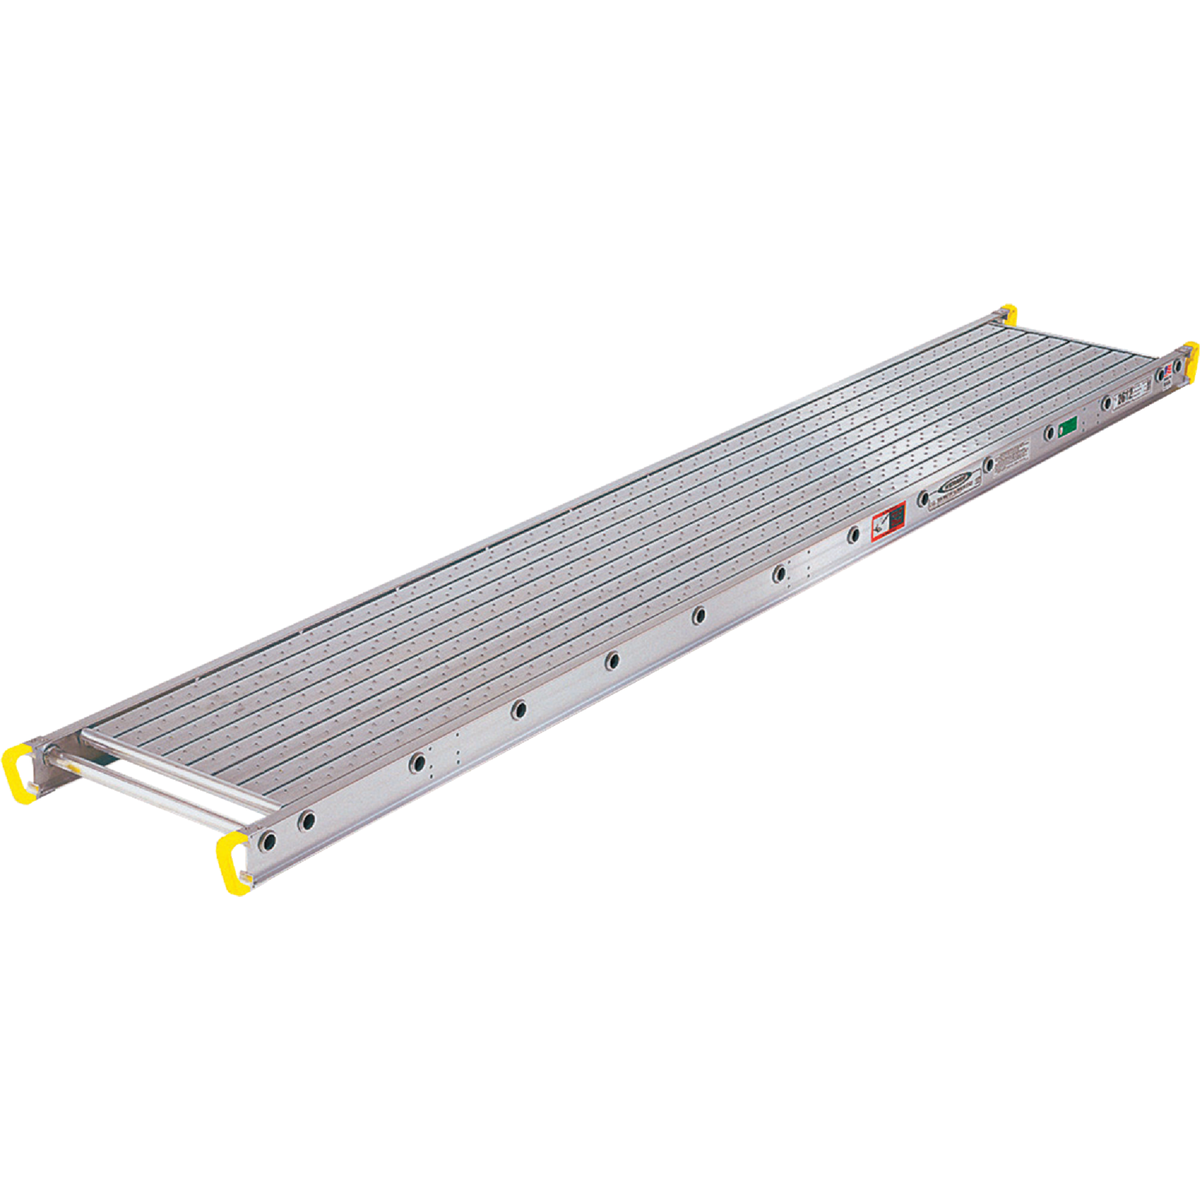 Scaffolding Plank Platforms